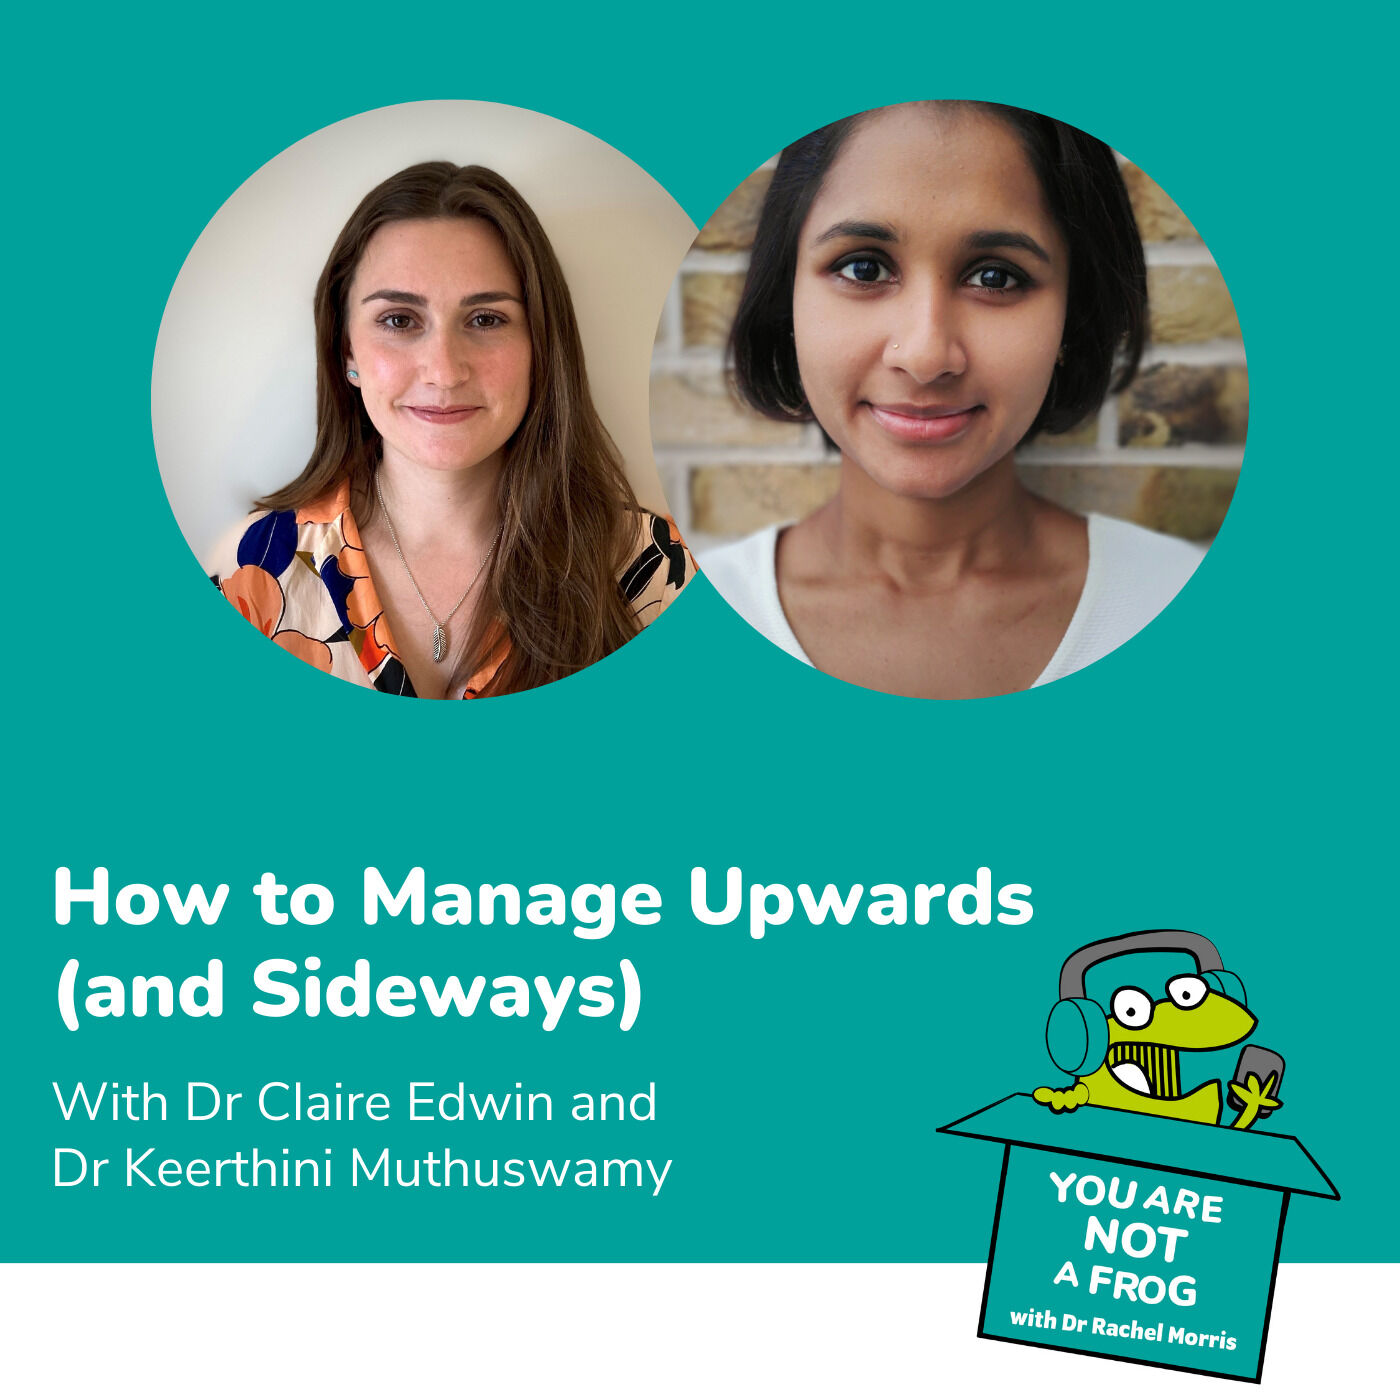 How to Manage Upwards (and Sideways)